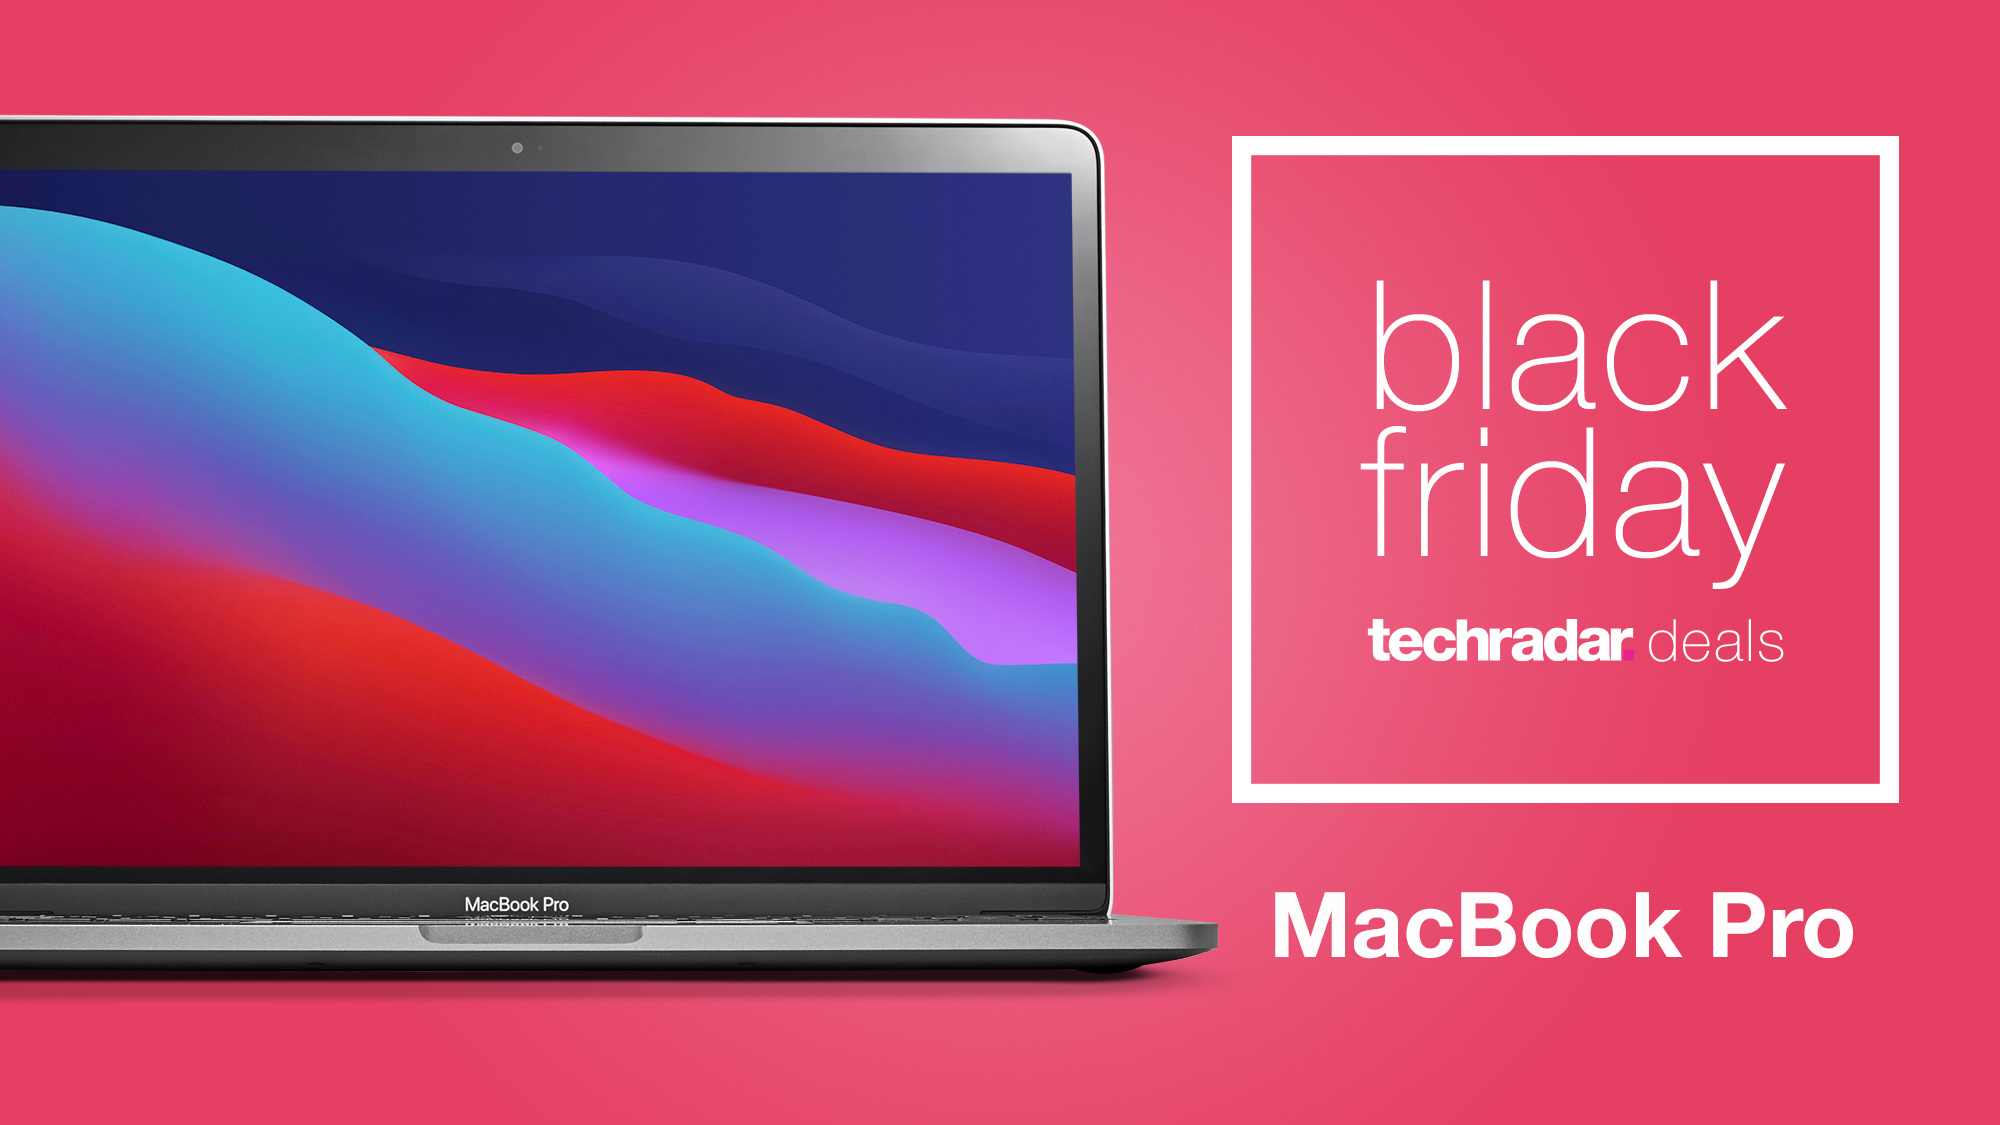 Apple macbook pro 15 inch black friday deals electric swing